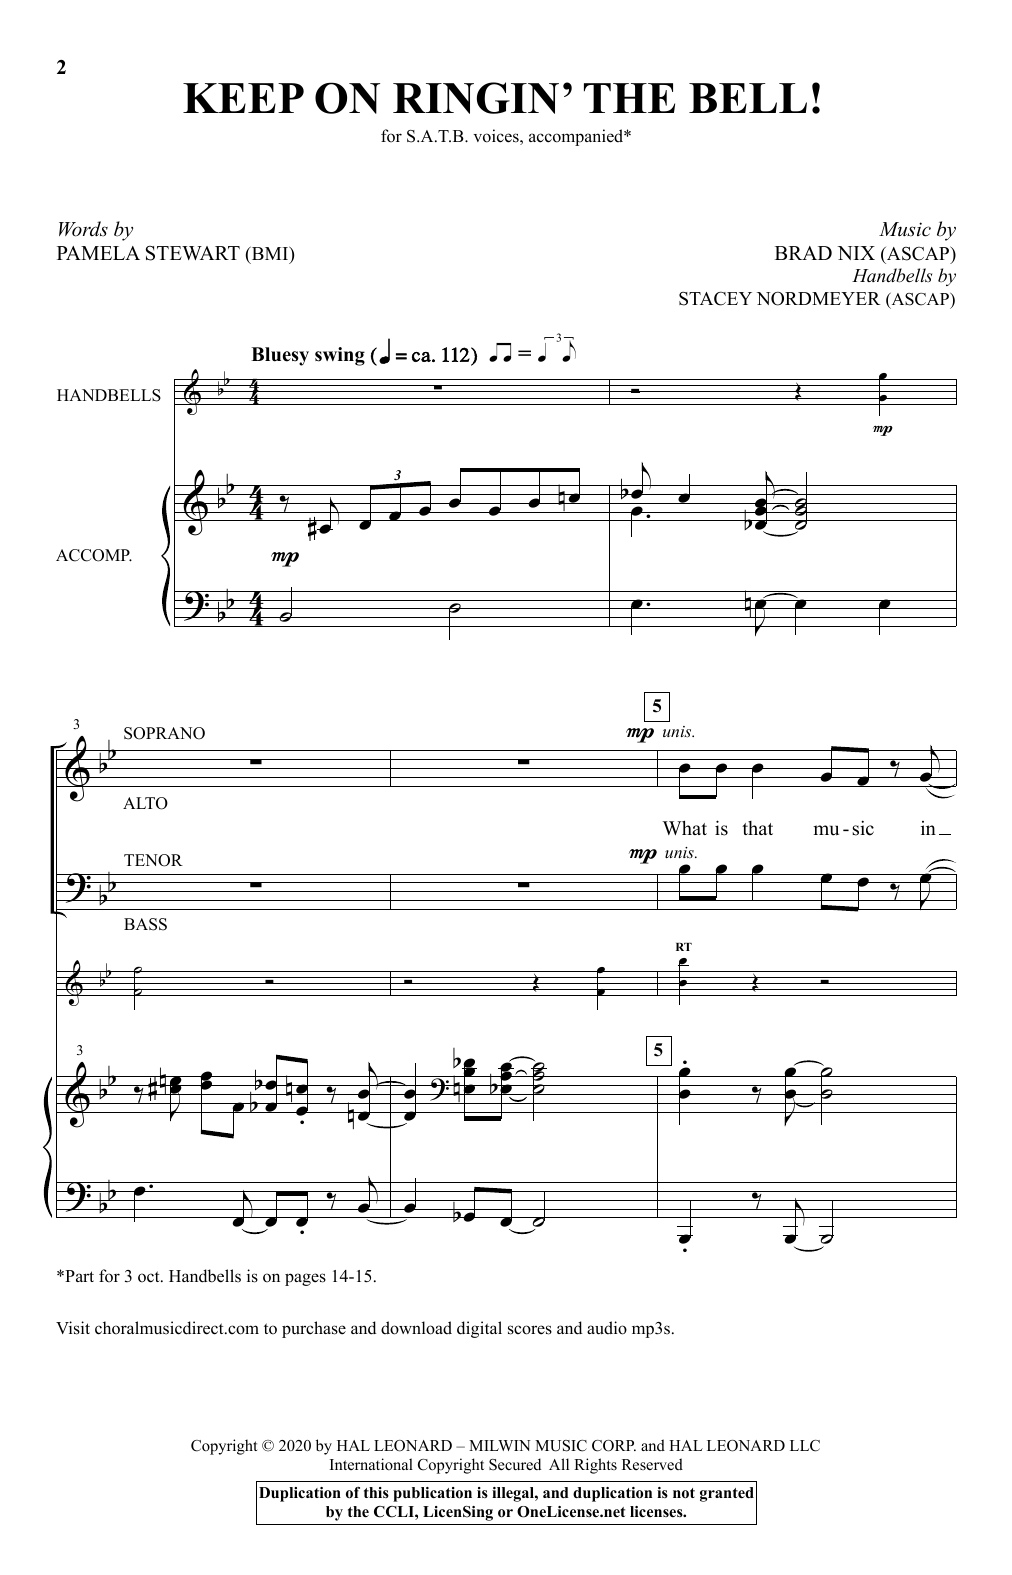 Pamela Stewart and Brad Nix Keep On Ringin' The Bell! Sheet Music Notes & Chords for SATB Choir - Download or Print PDF